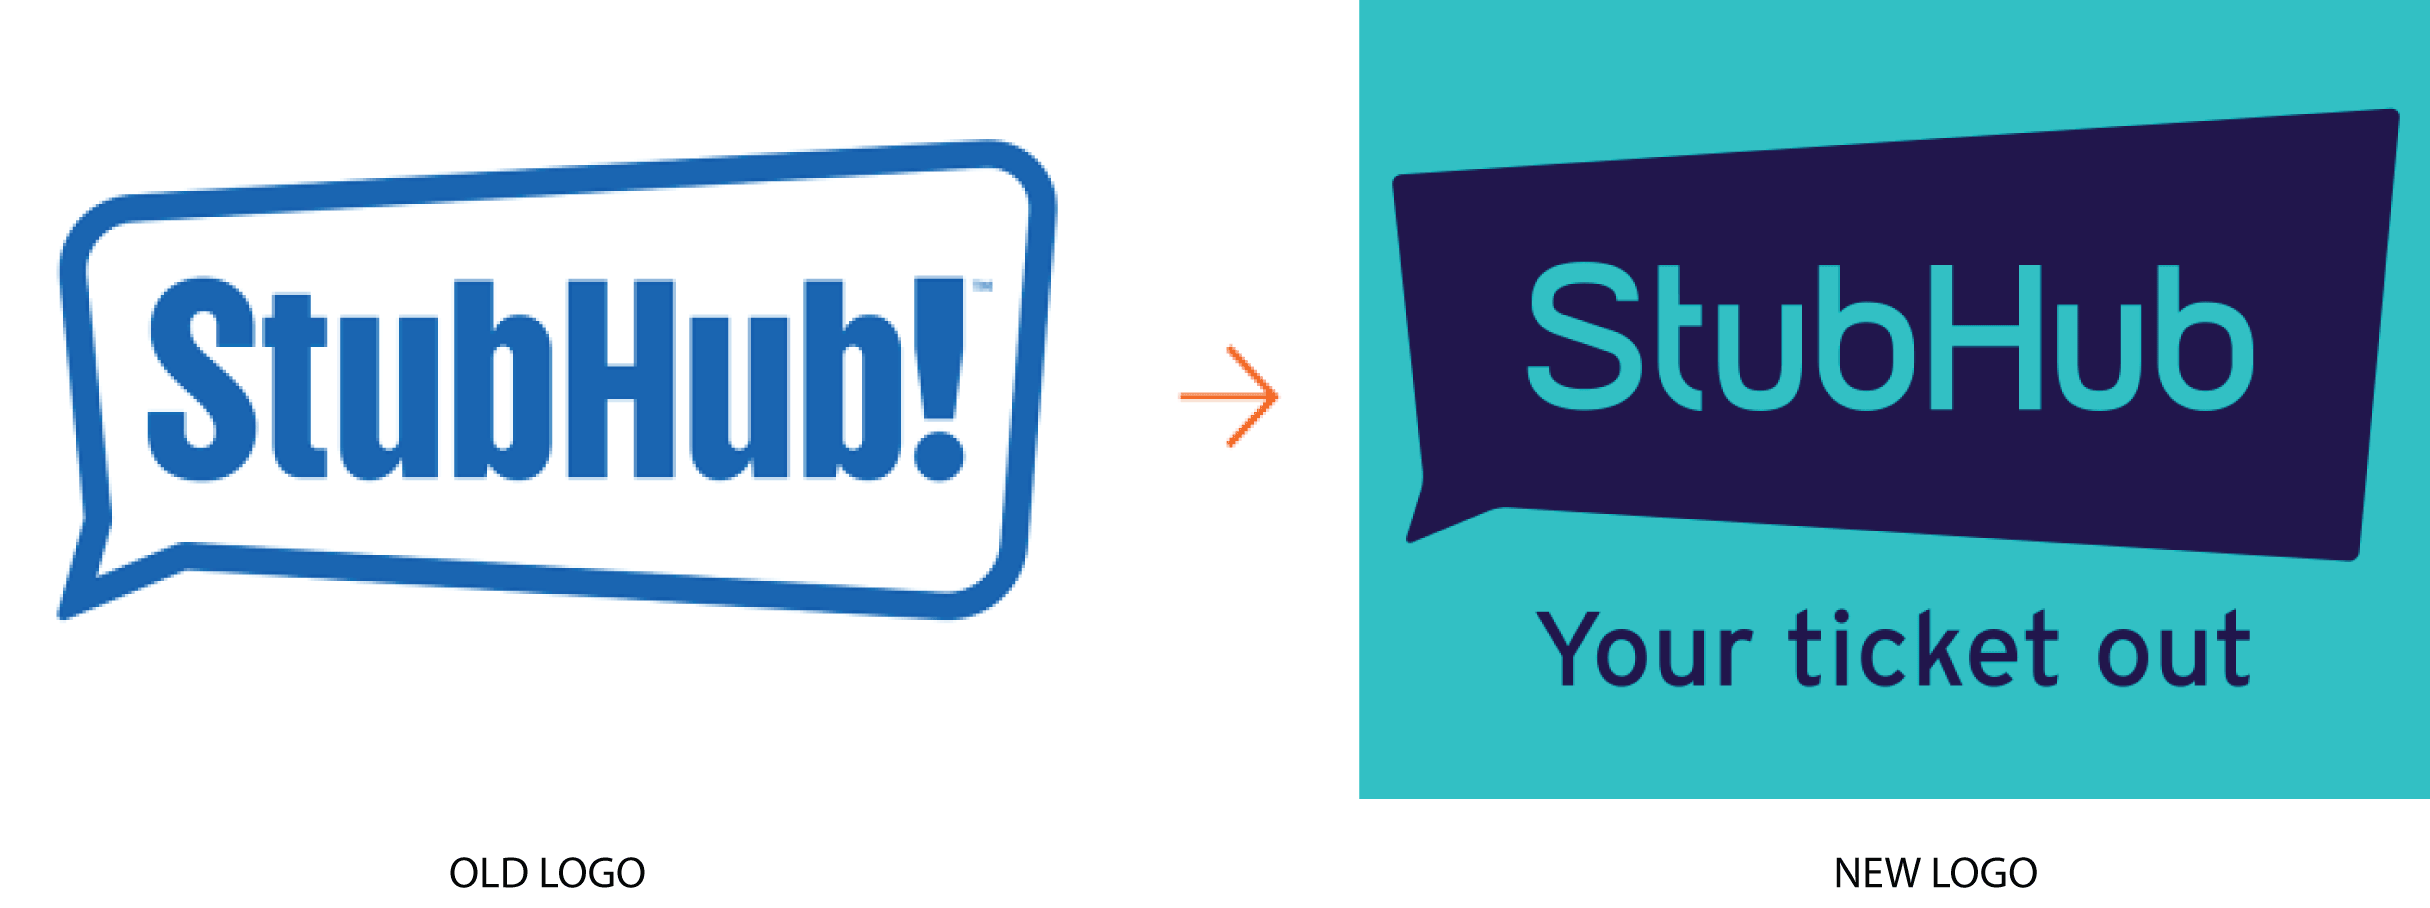 StubHub Logo - Stubhub's Subtle Sub